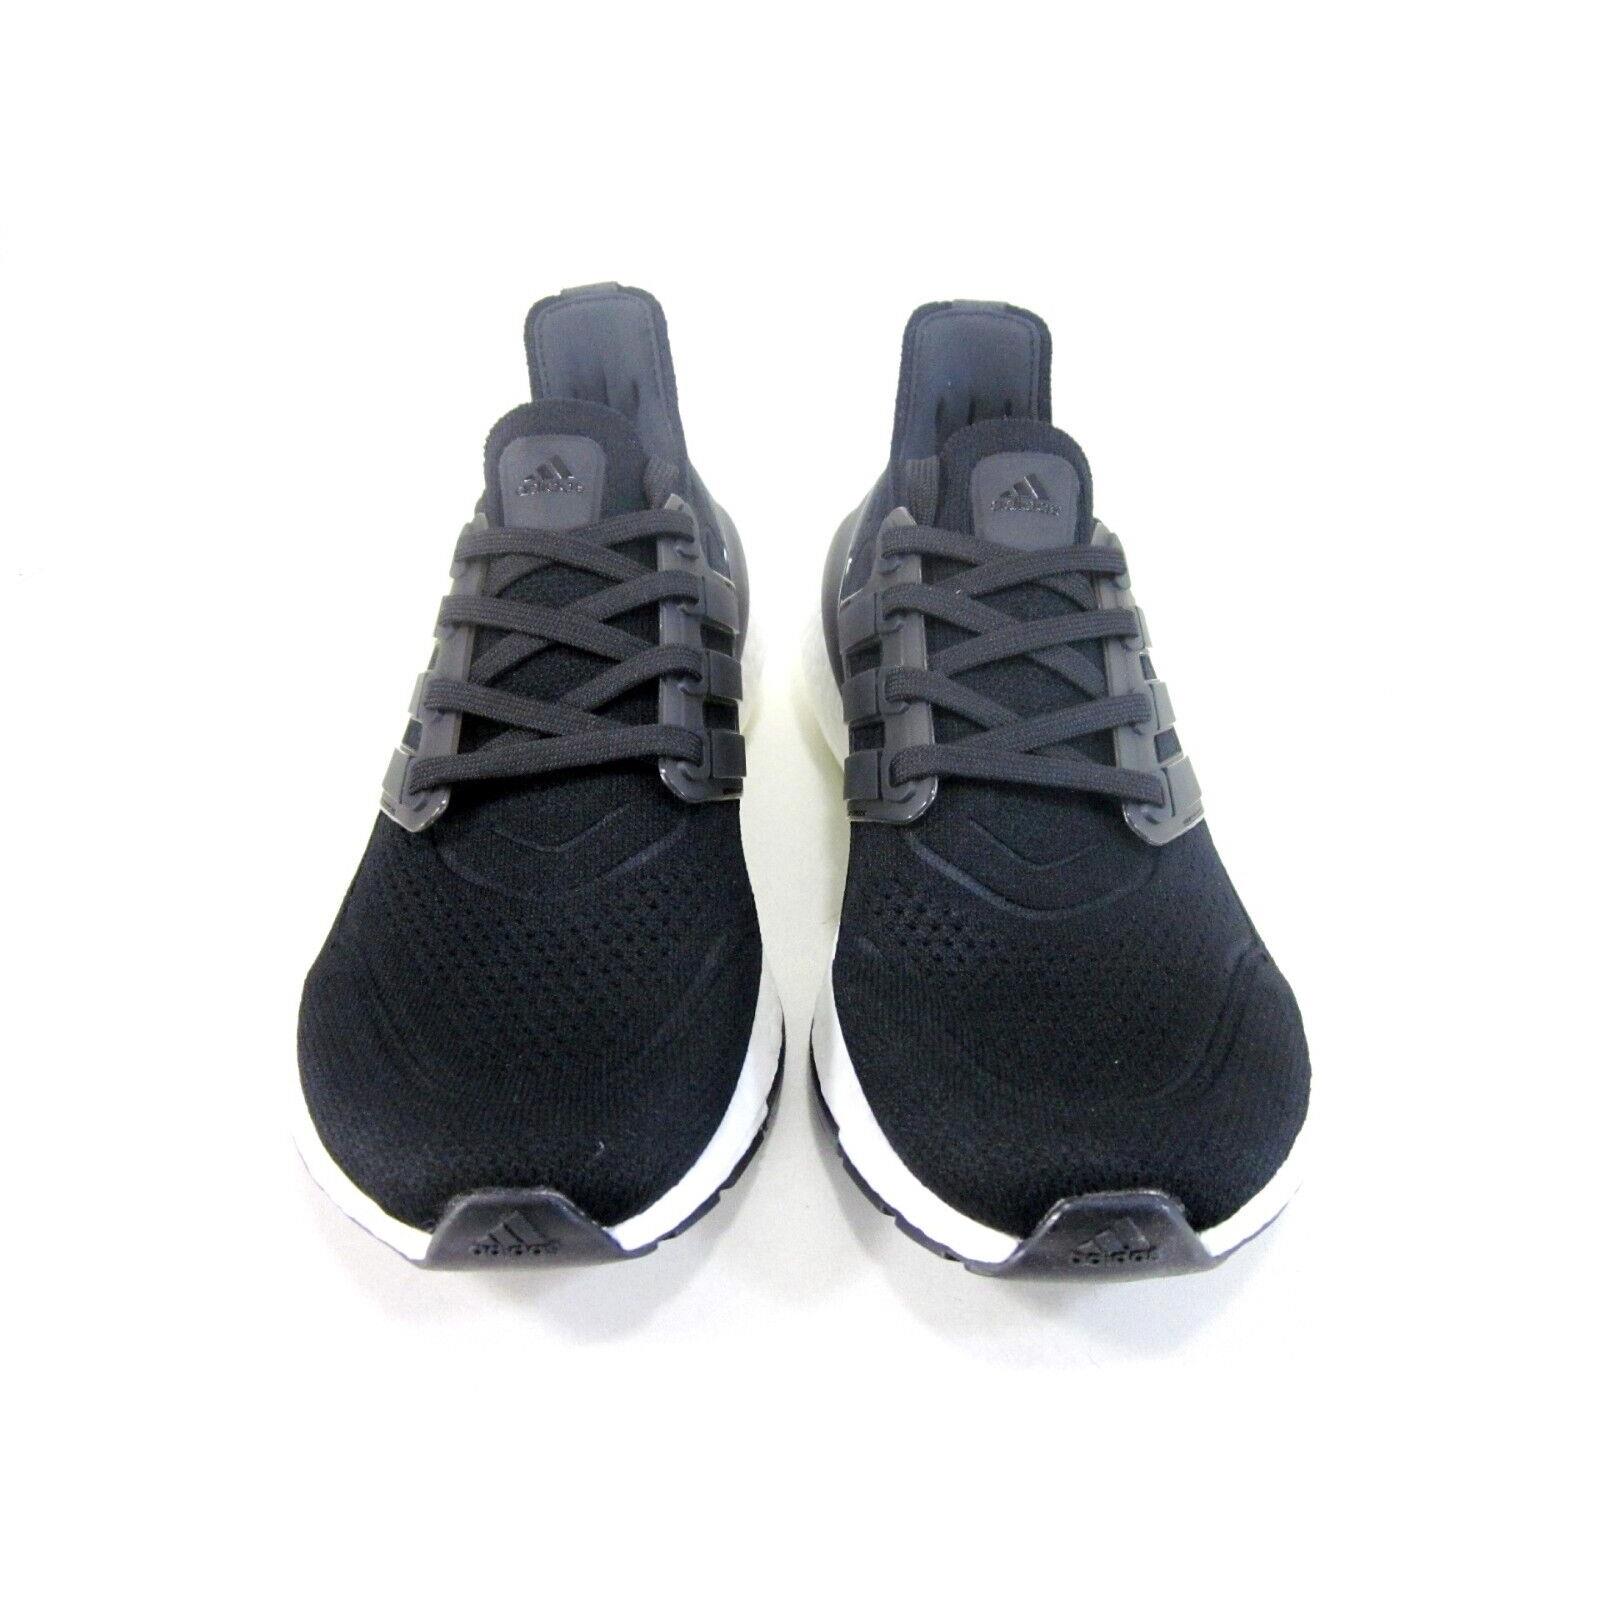 Adidas shoes Ultraboost - Black/Grey/White 2